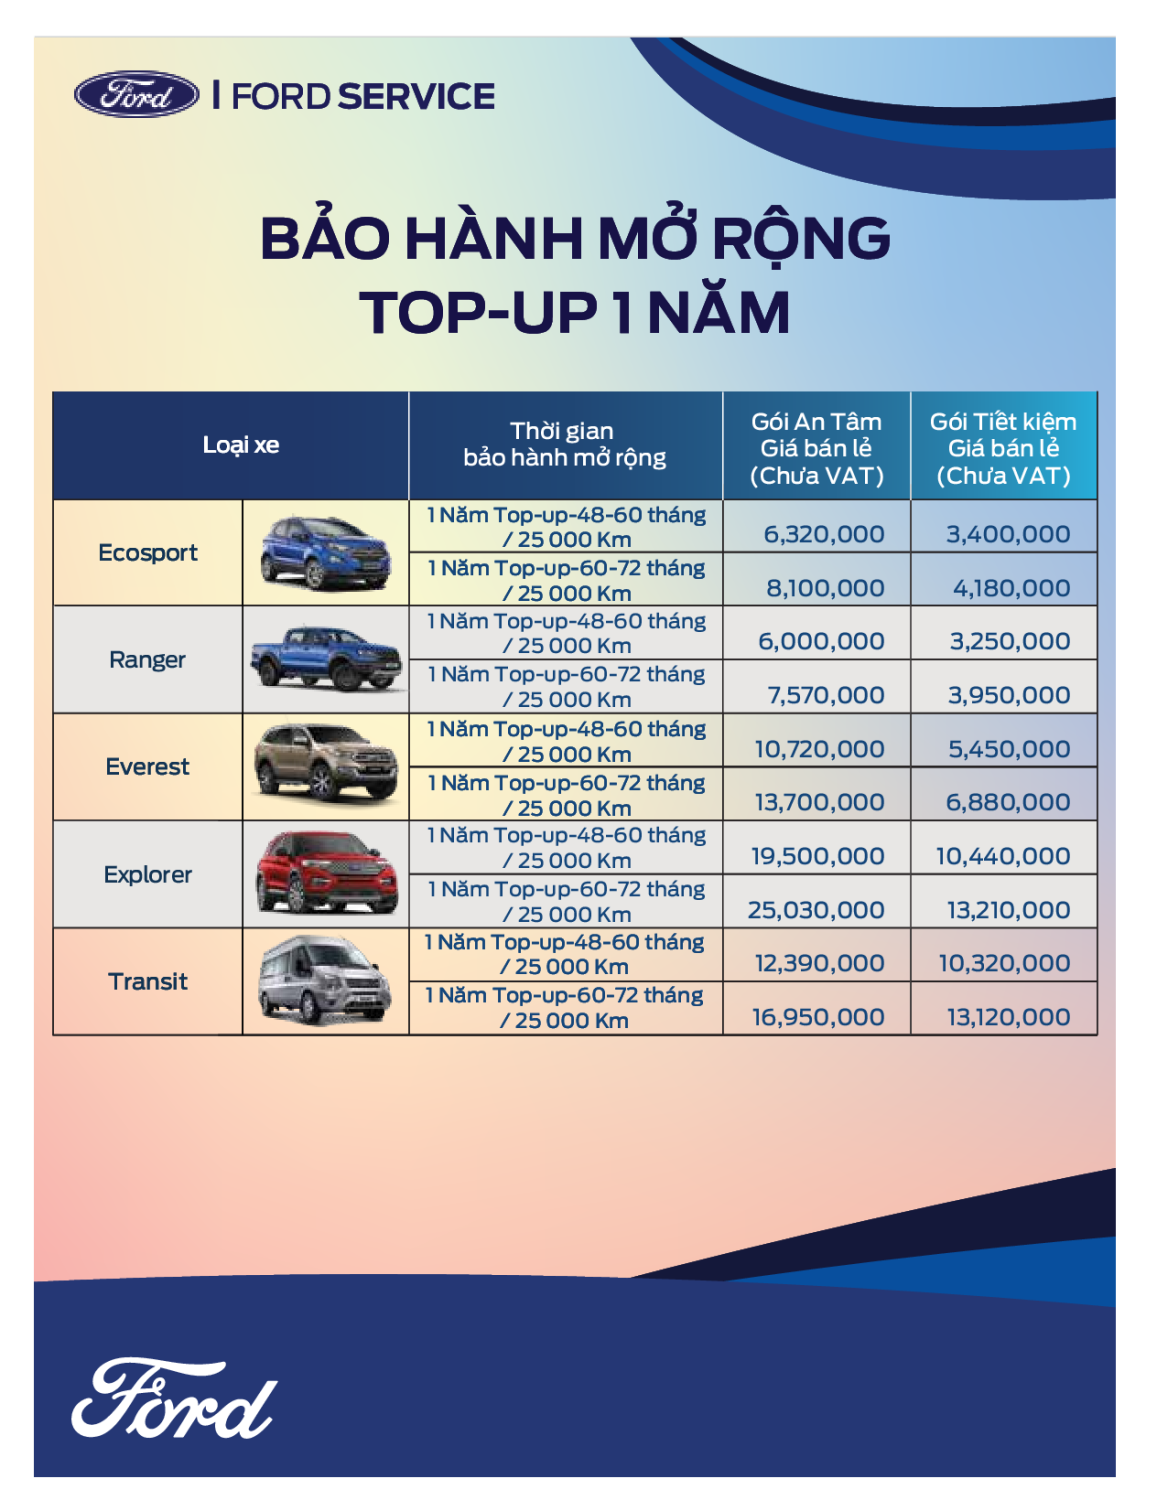 bao-hanh-mo-rong-xe-ford-top-up-1-nam